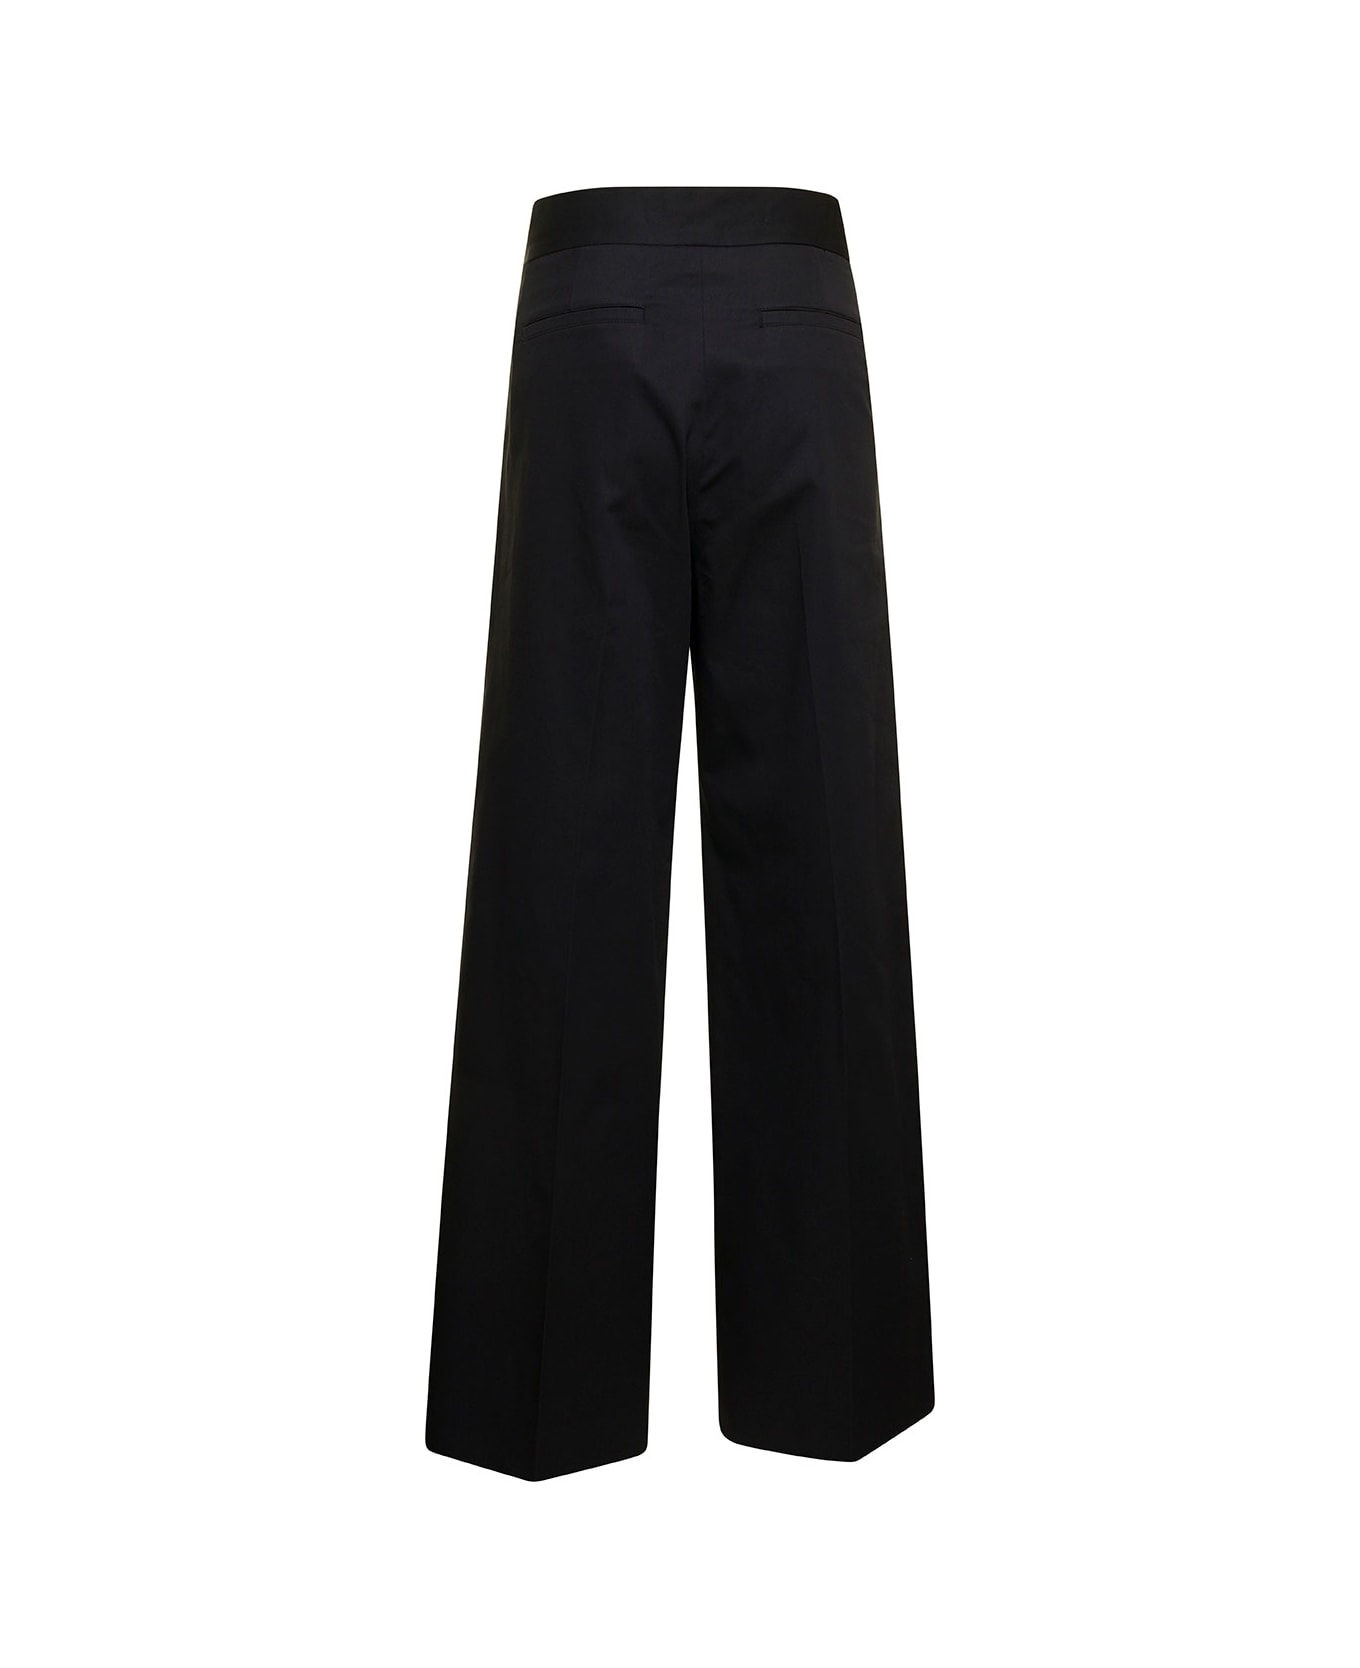 Maison Kitsuné Black Loose Pants With Concealed Closure In Cotton Woman - Black